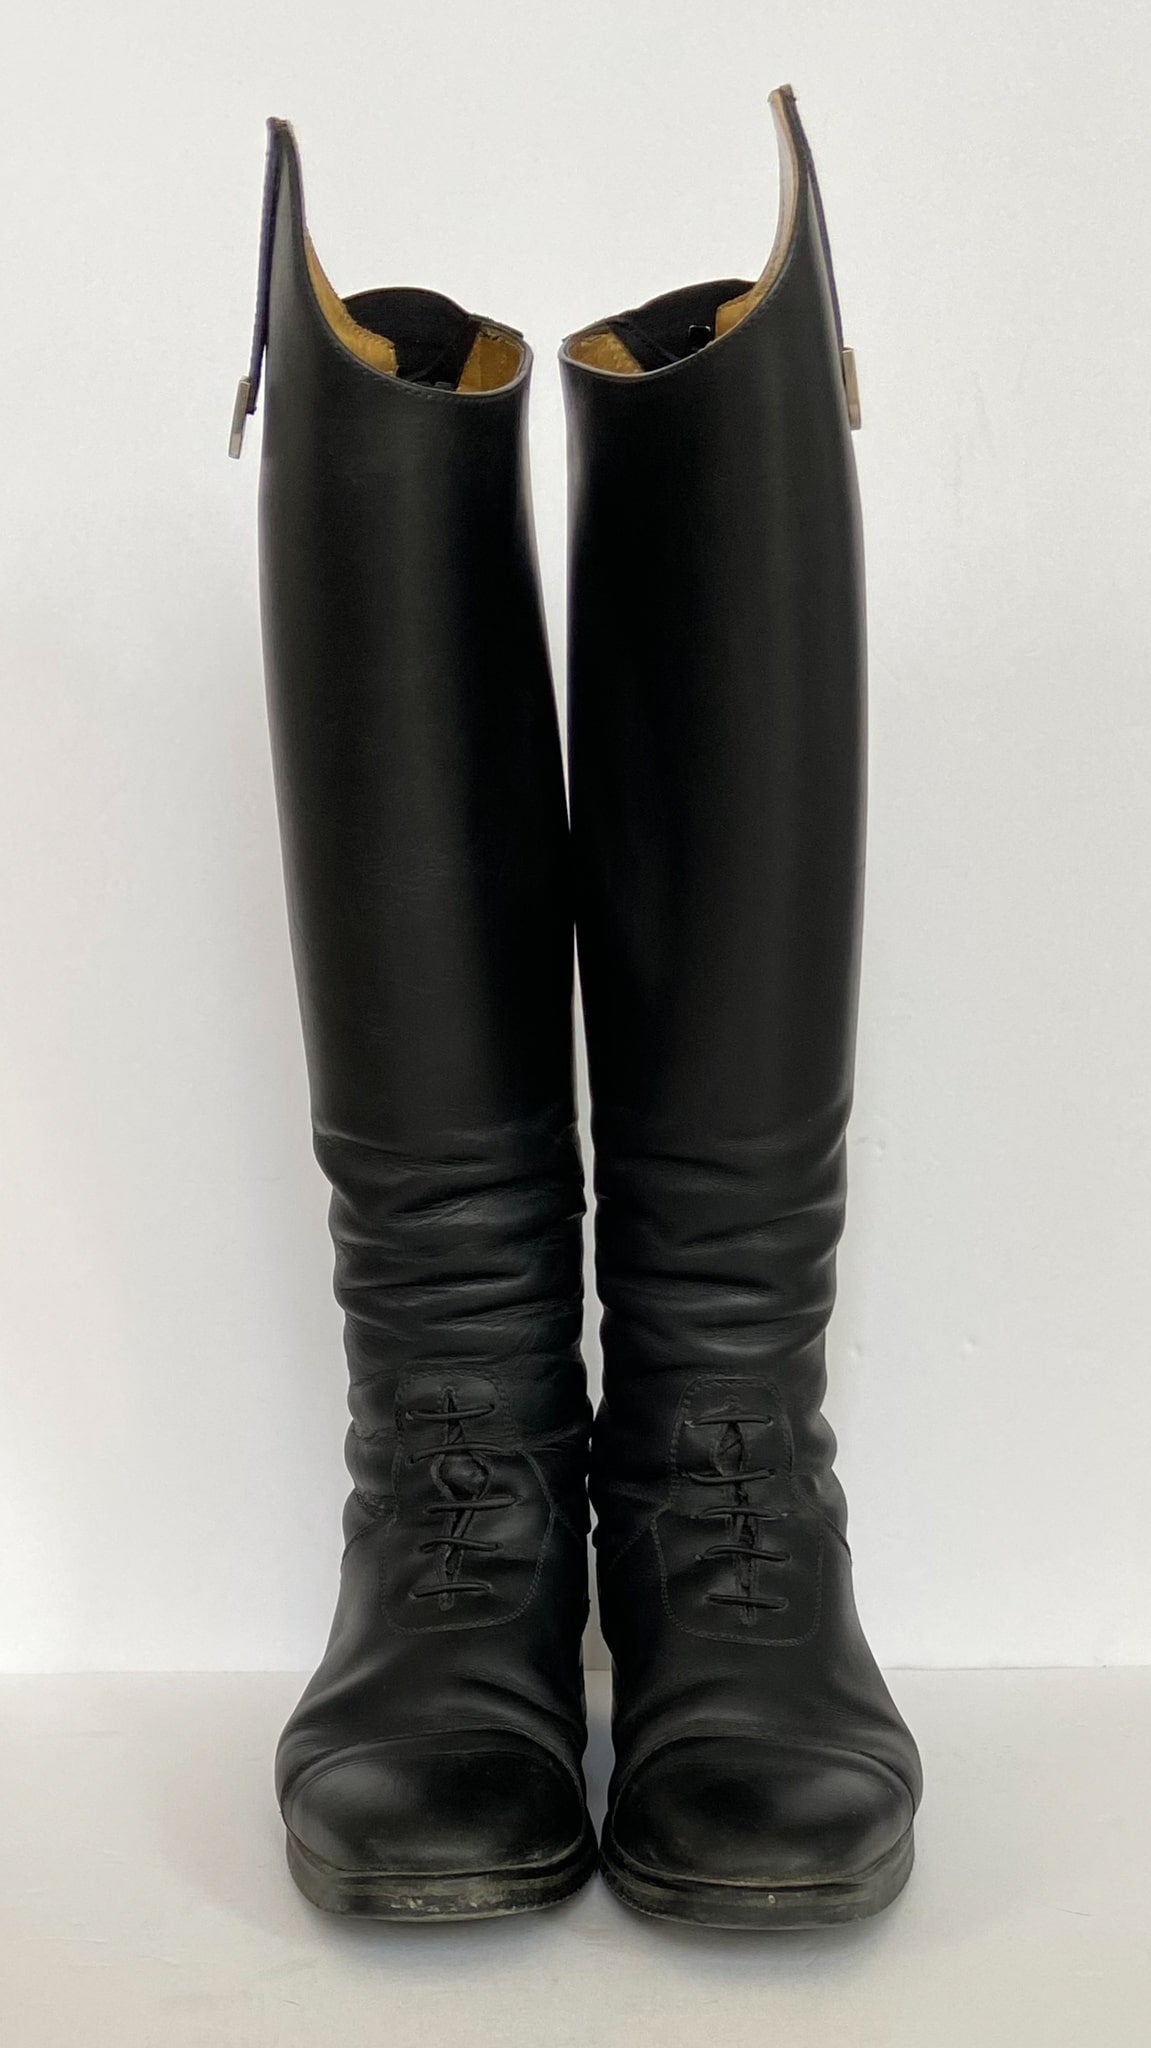 Tucci Galileo Field Boots - Black - Women's Size 36D